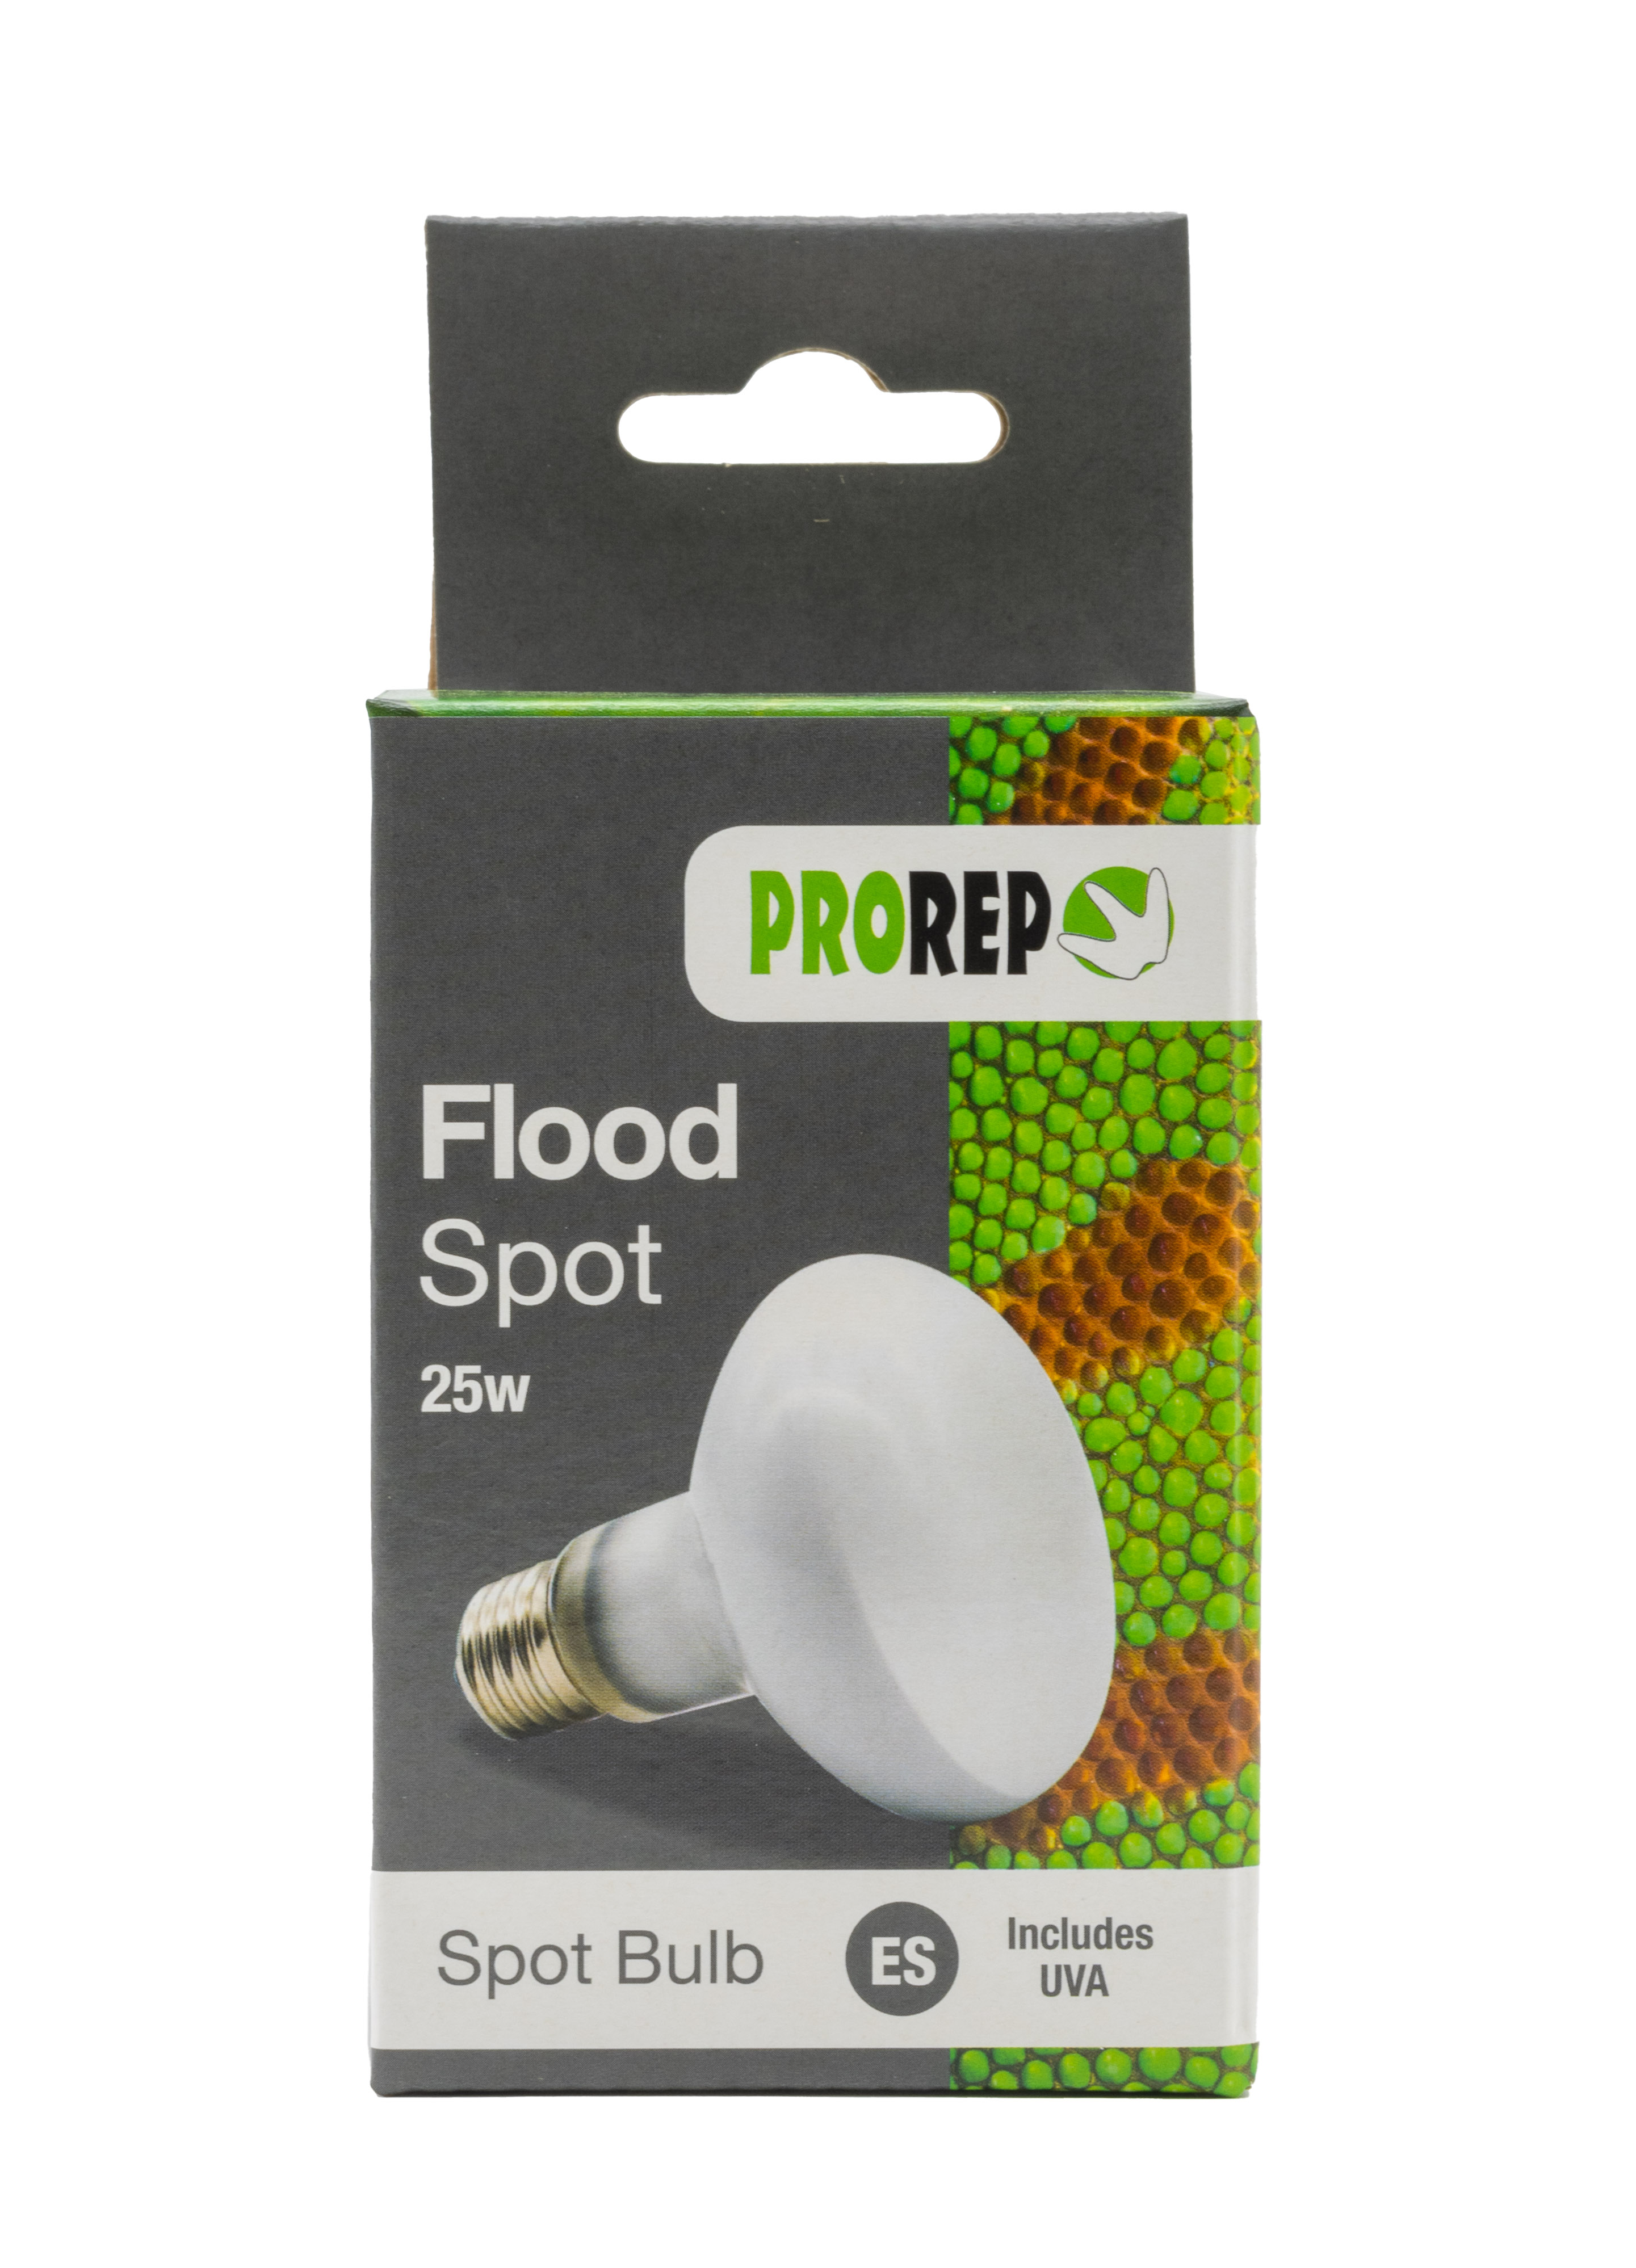 ProRep Flood Spot Lamp 25w ES